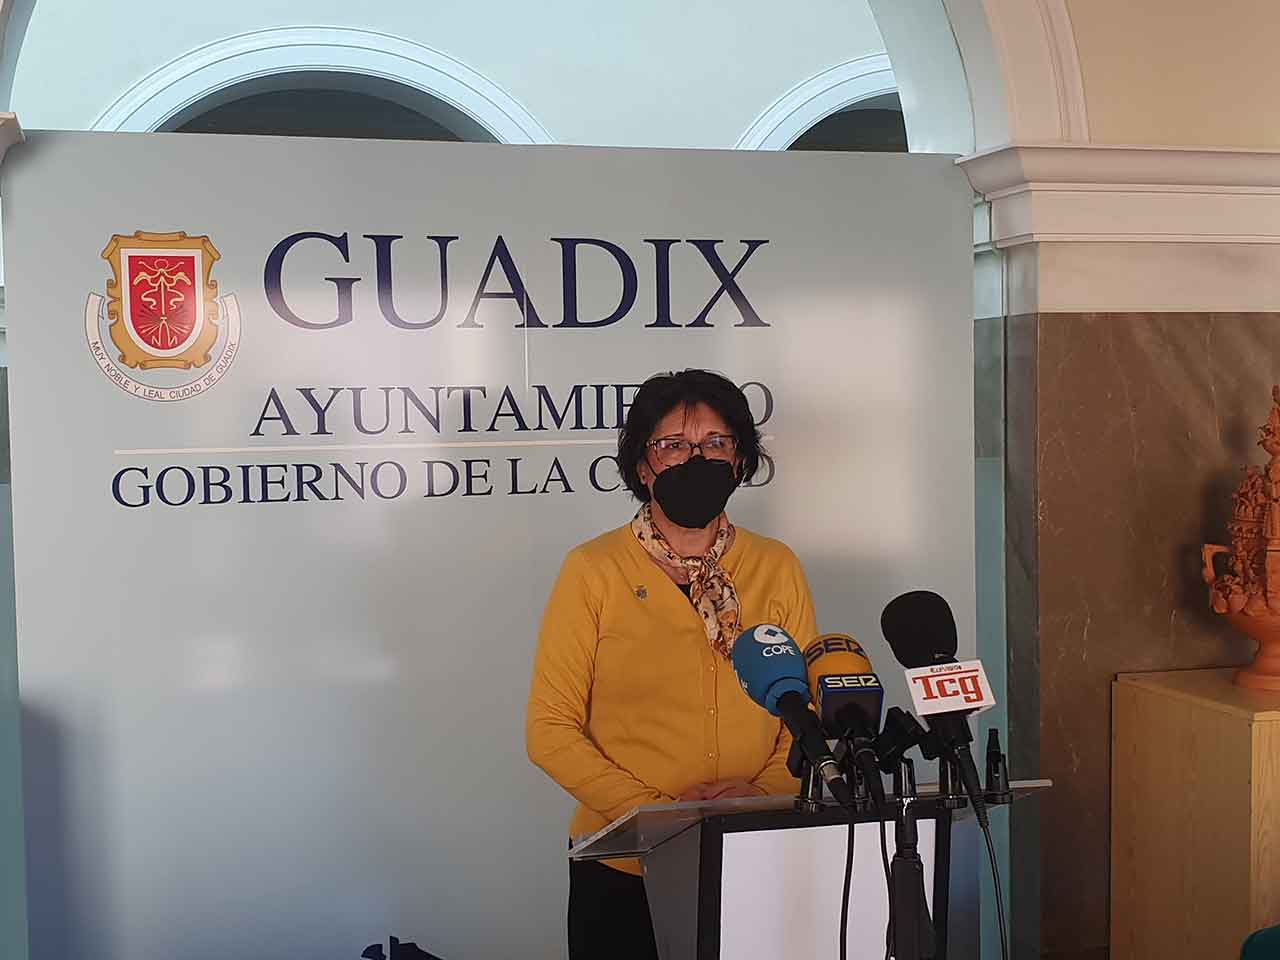 Encarnación Pérez - Concejala Guadix